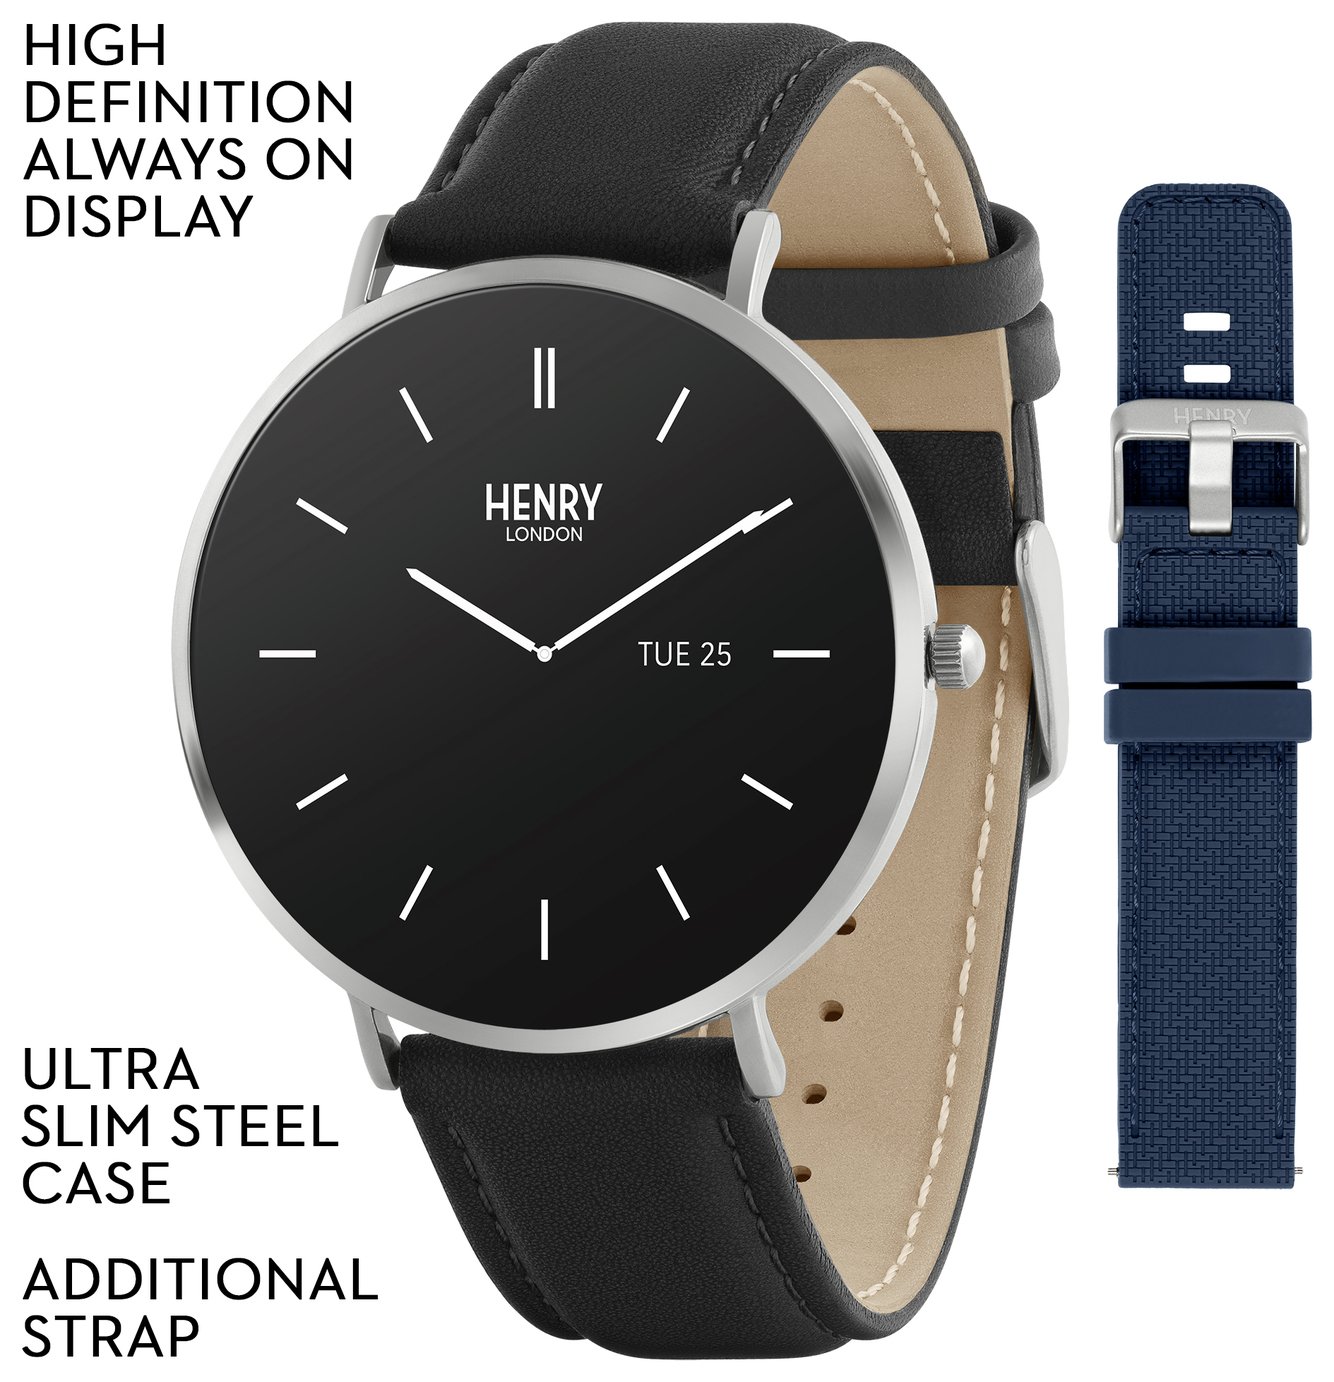 Henry London HD Ultra Slim Black and Blue Smart Watch Set